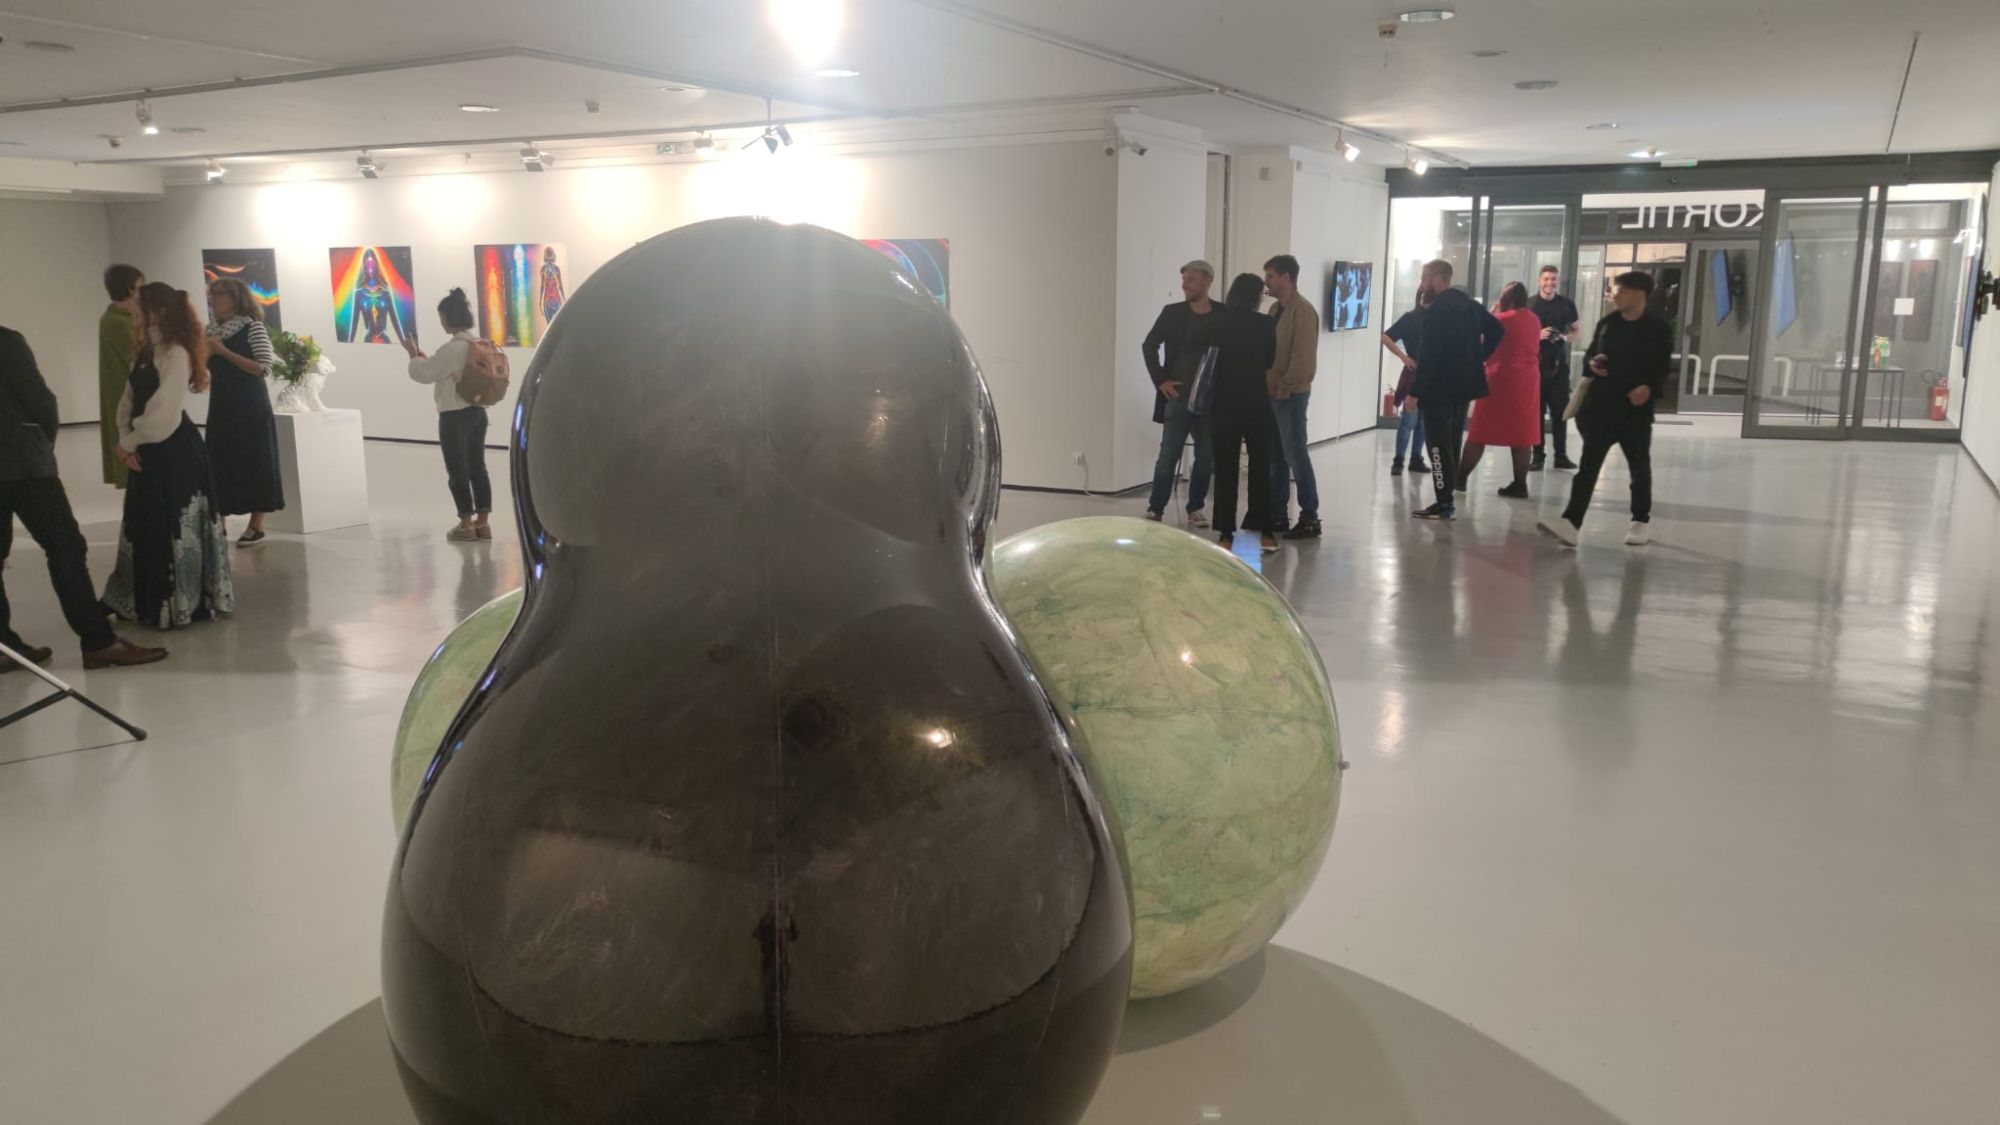 Glowing Globe: Ethics and Aesthetics in Postdigital Art